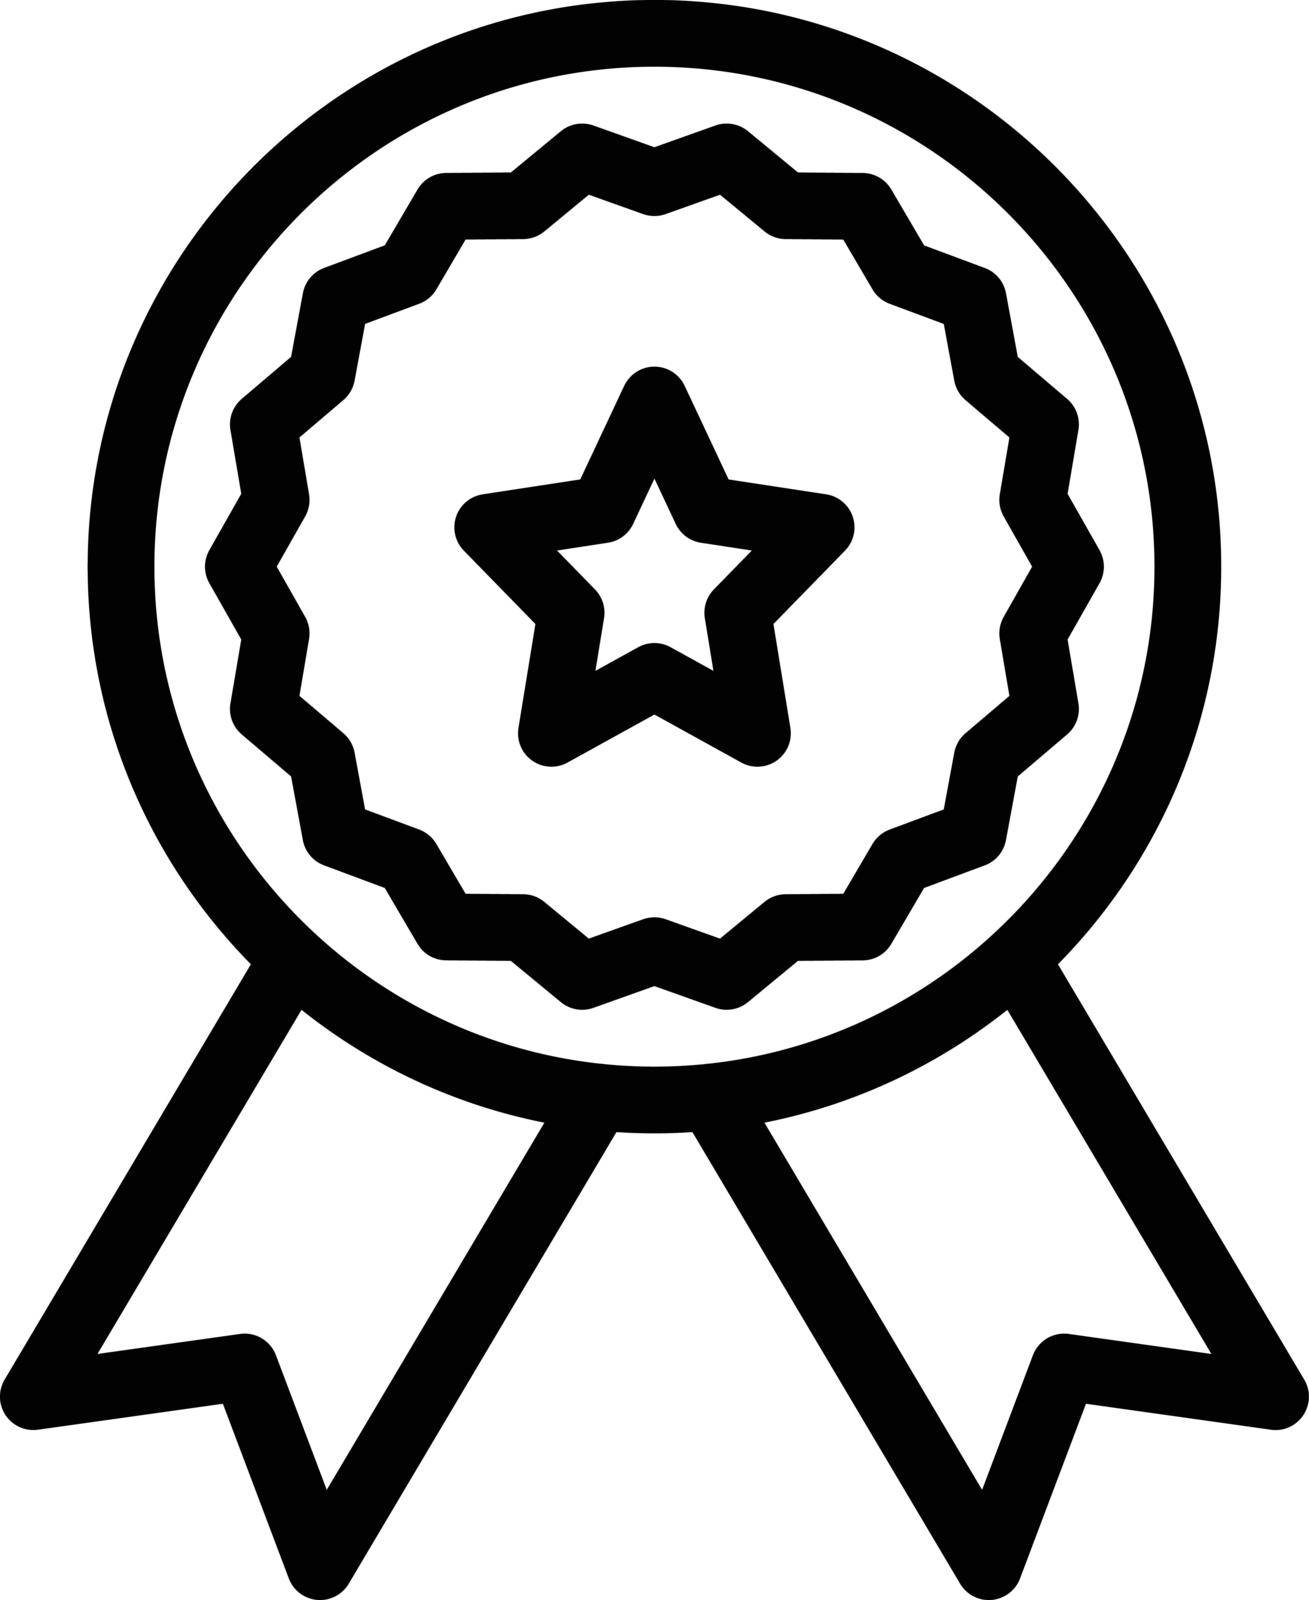 badge by vectorstall